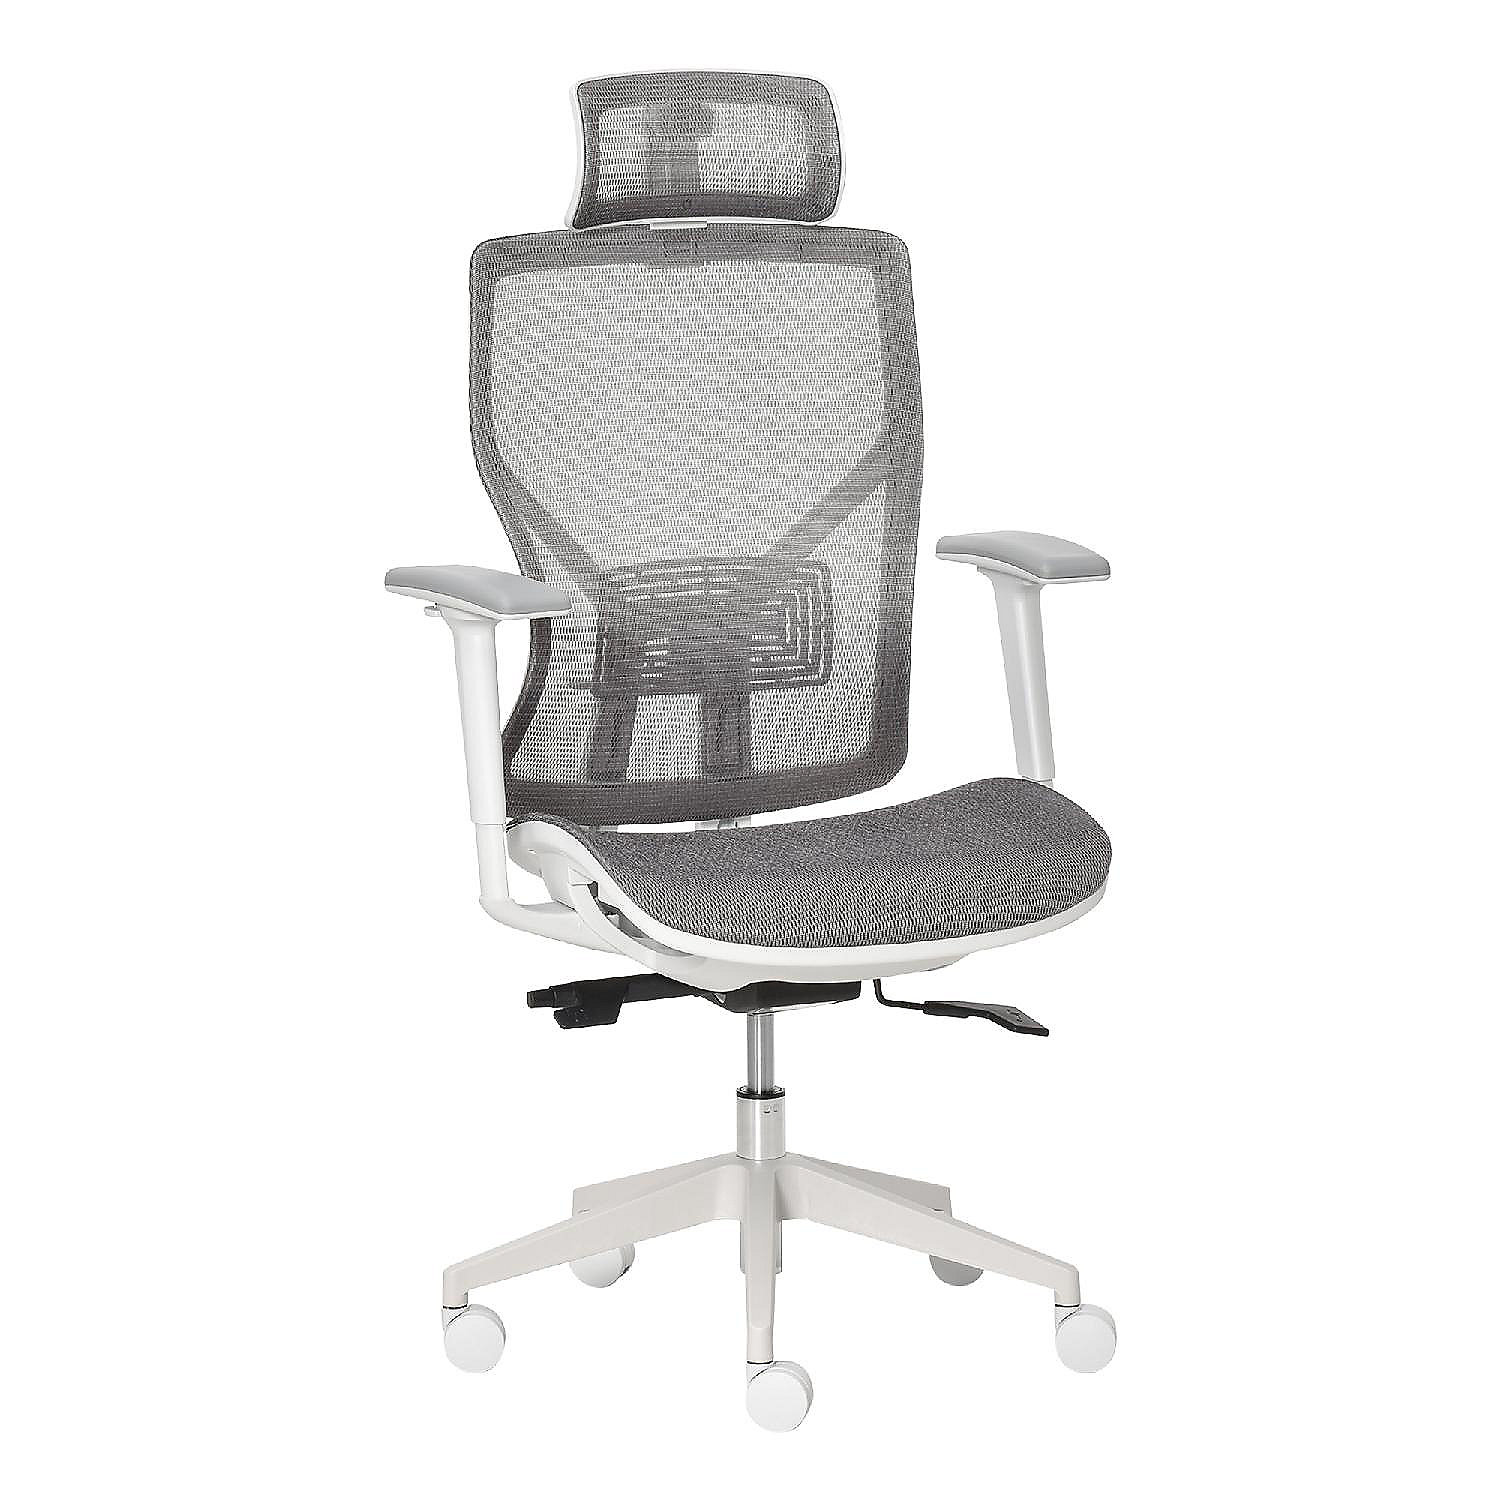 Ergonomic Office Chair with Adjustable Headrest  Lumbar Support, High Back  - www.kikizake.com